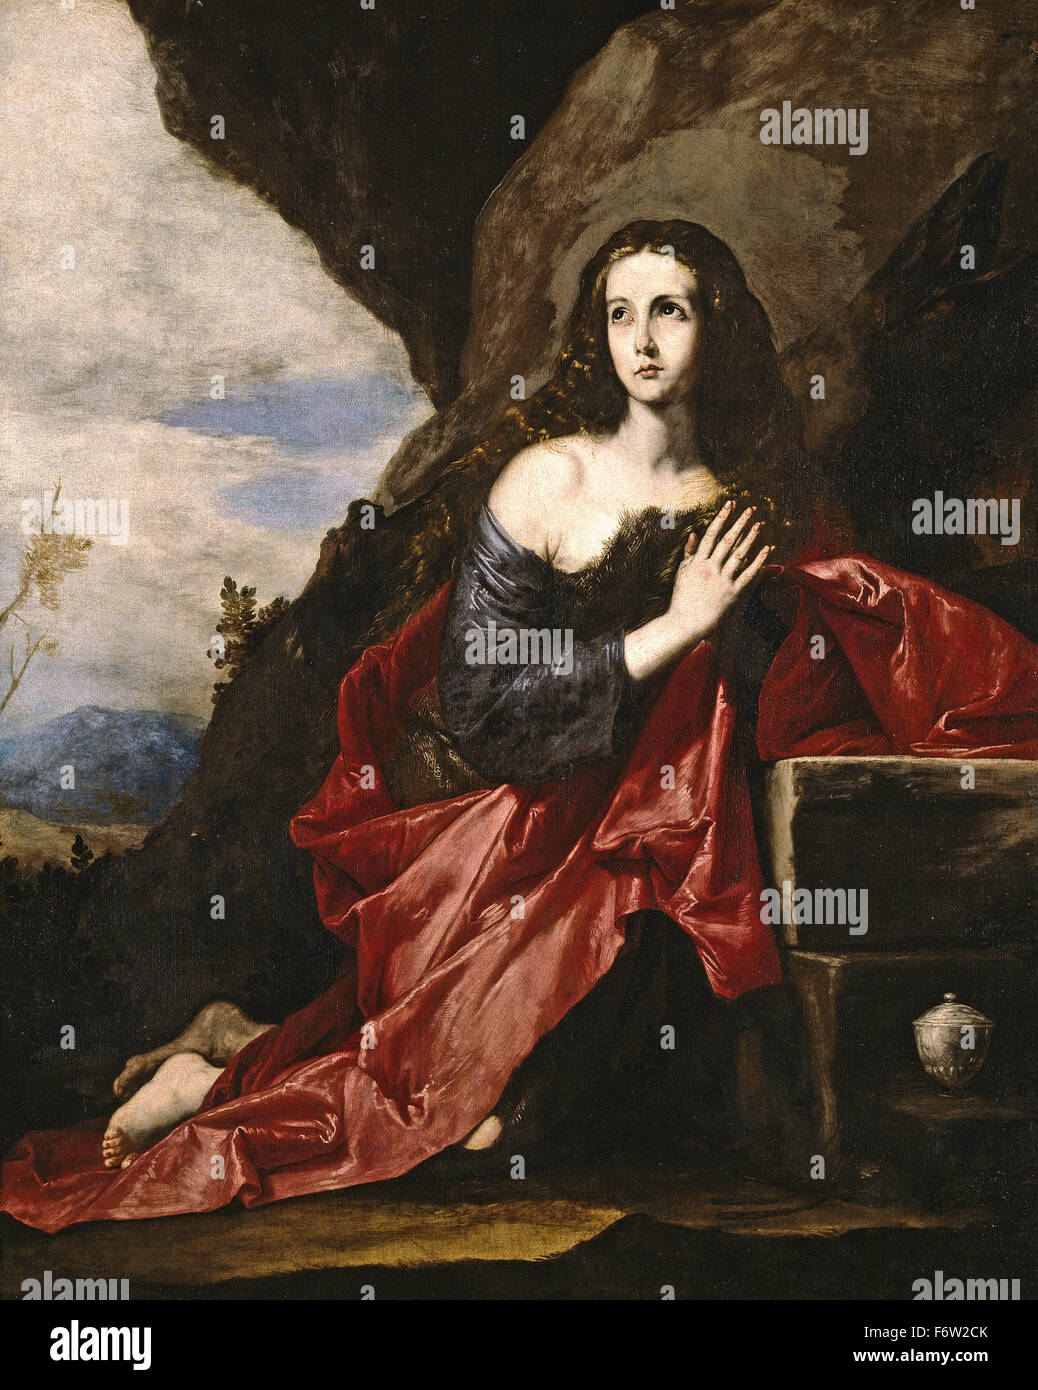 Jusepe de Ribera - Mary Magdalene Stock Photo